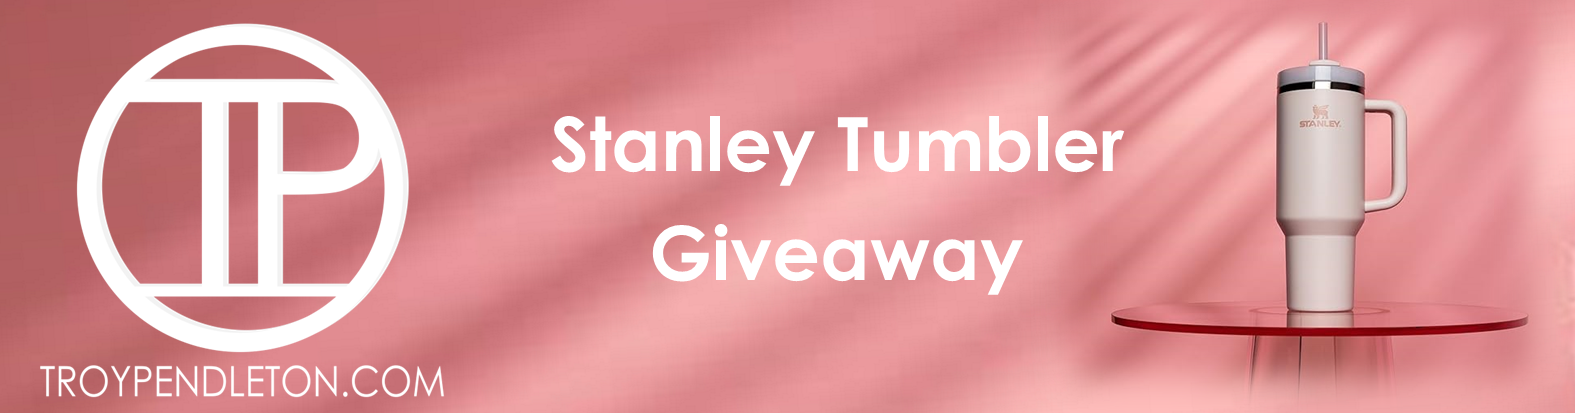 Stanley Tumbler Giveaway Slide